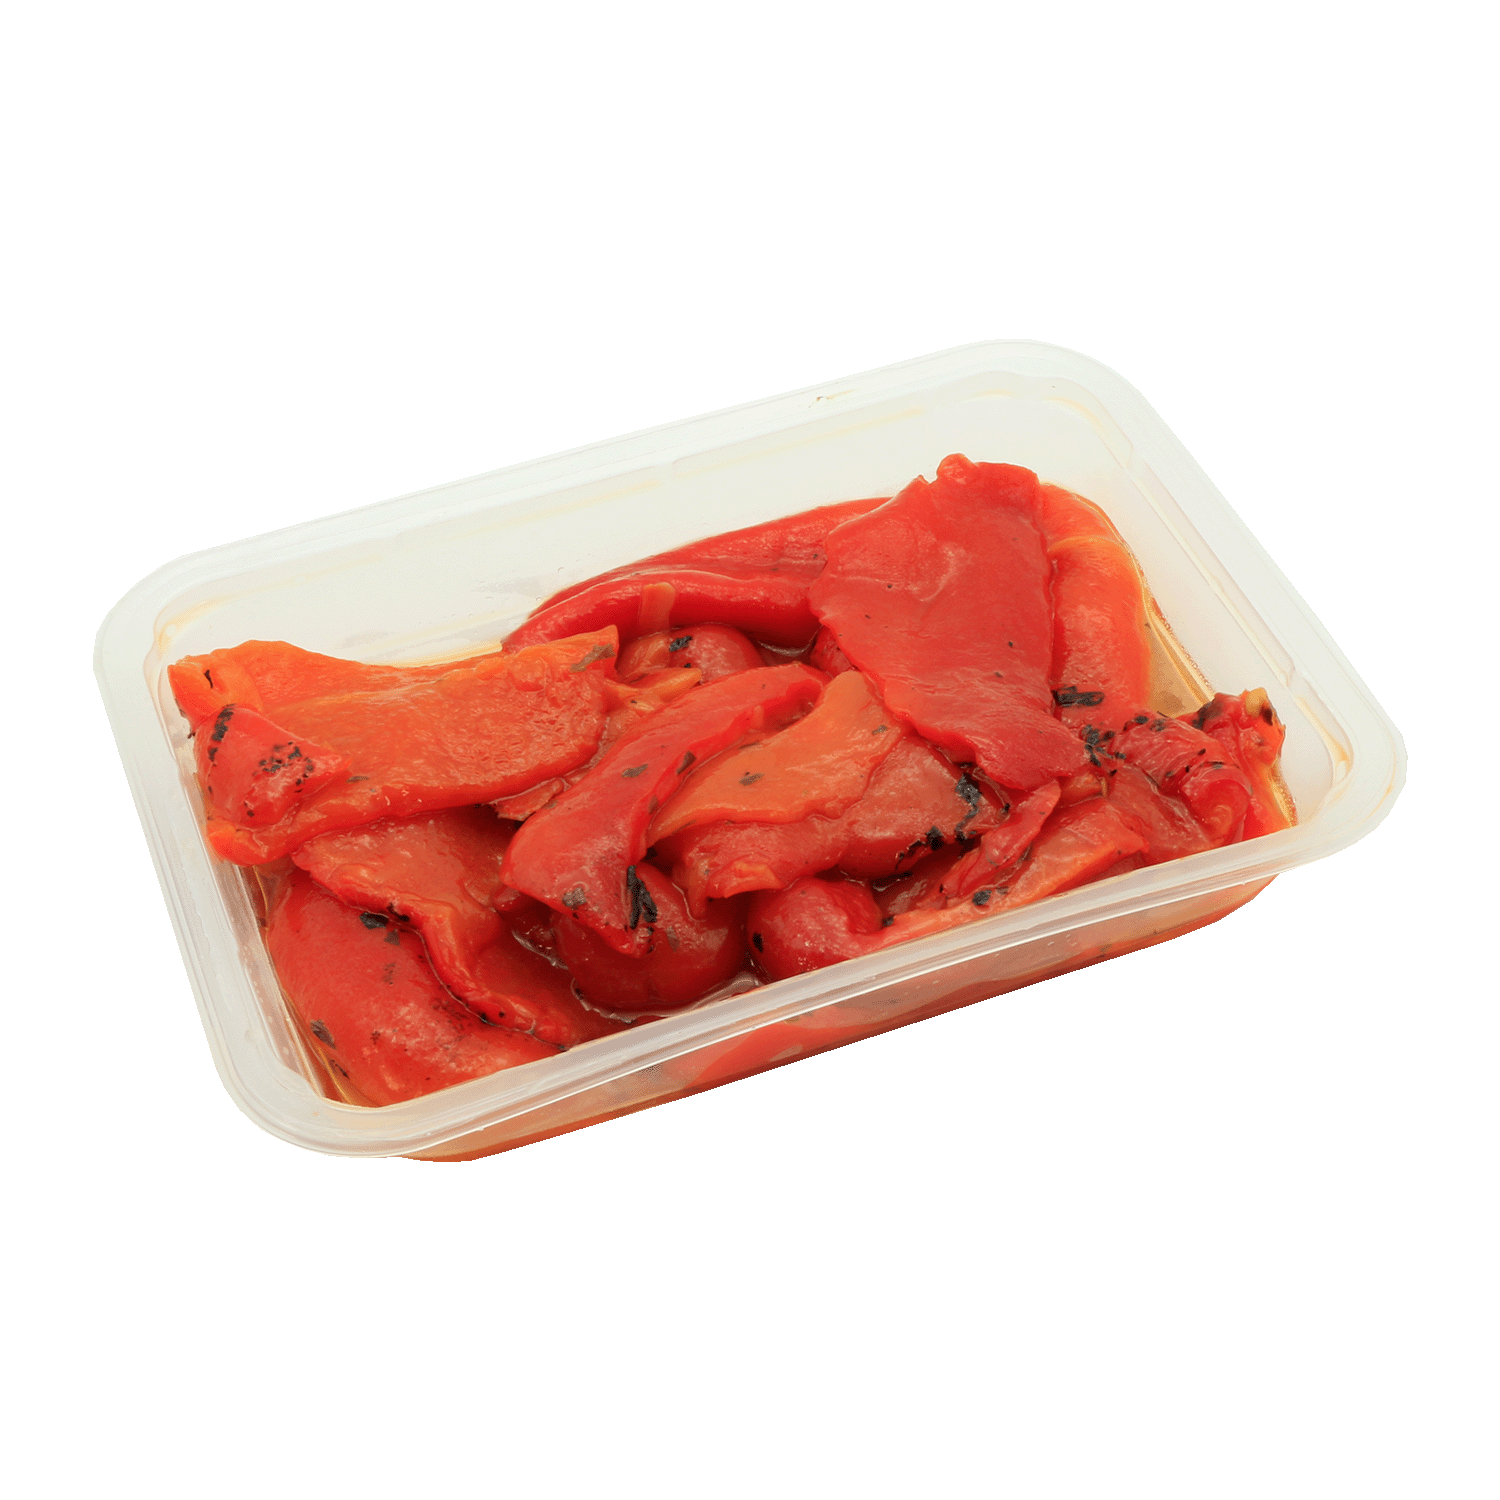 Grillgemüse rote Paprika, 300g